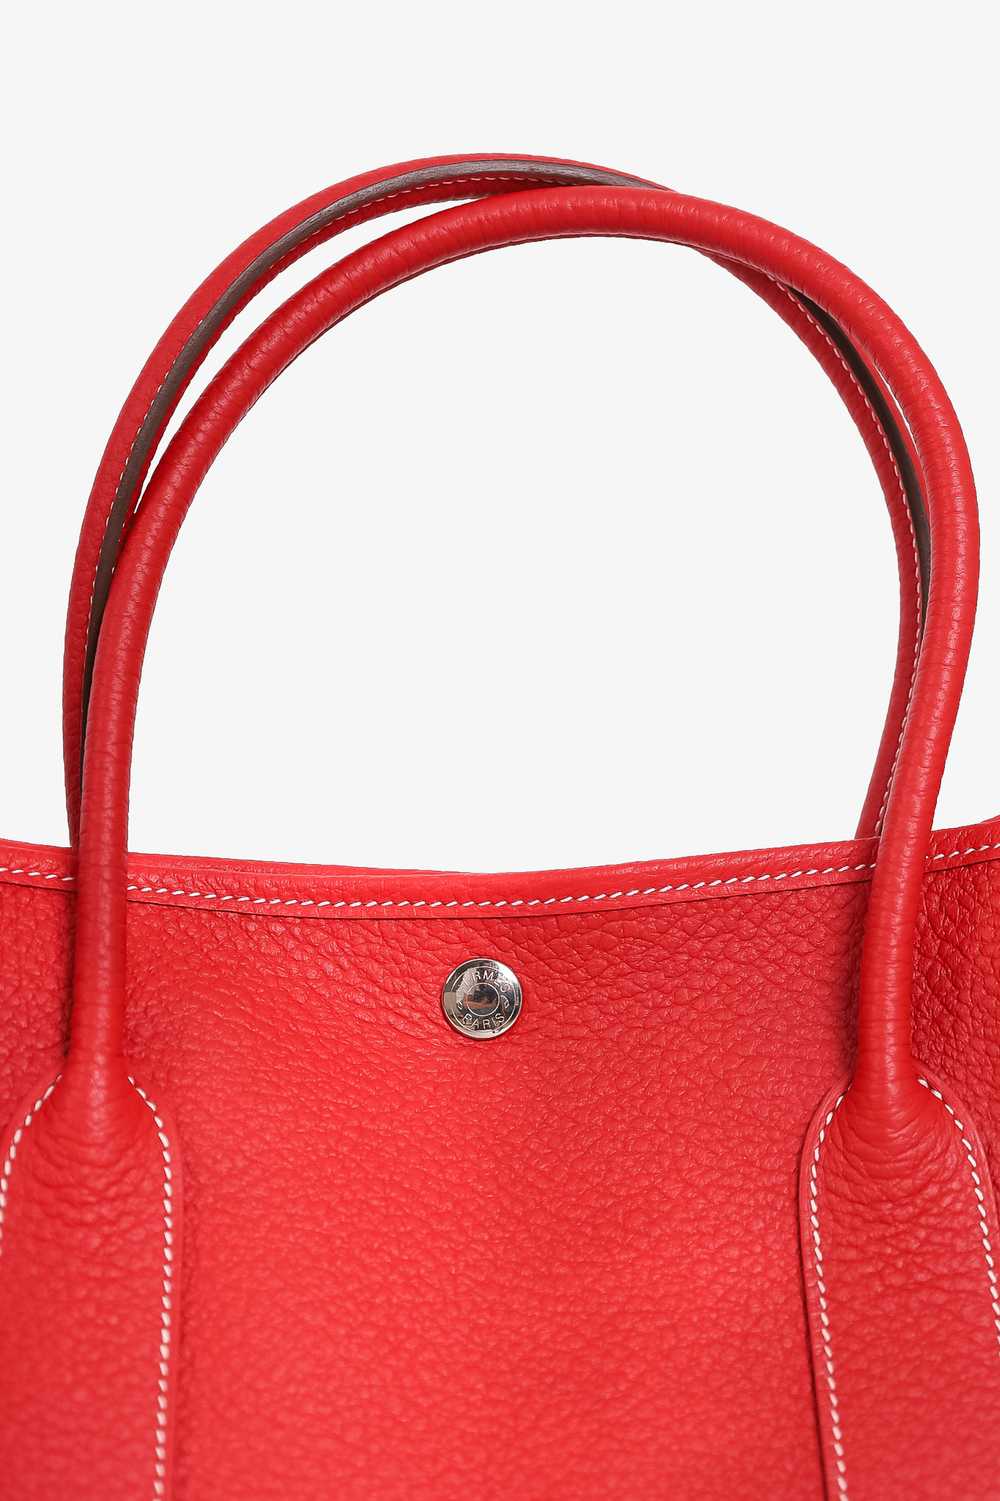 Hermès 2013 Red Negonda Garden Party 36 Tote Bag - image 10